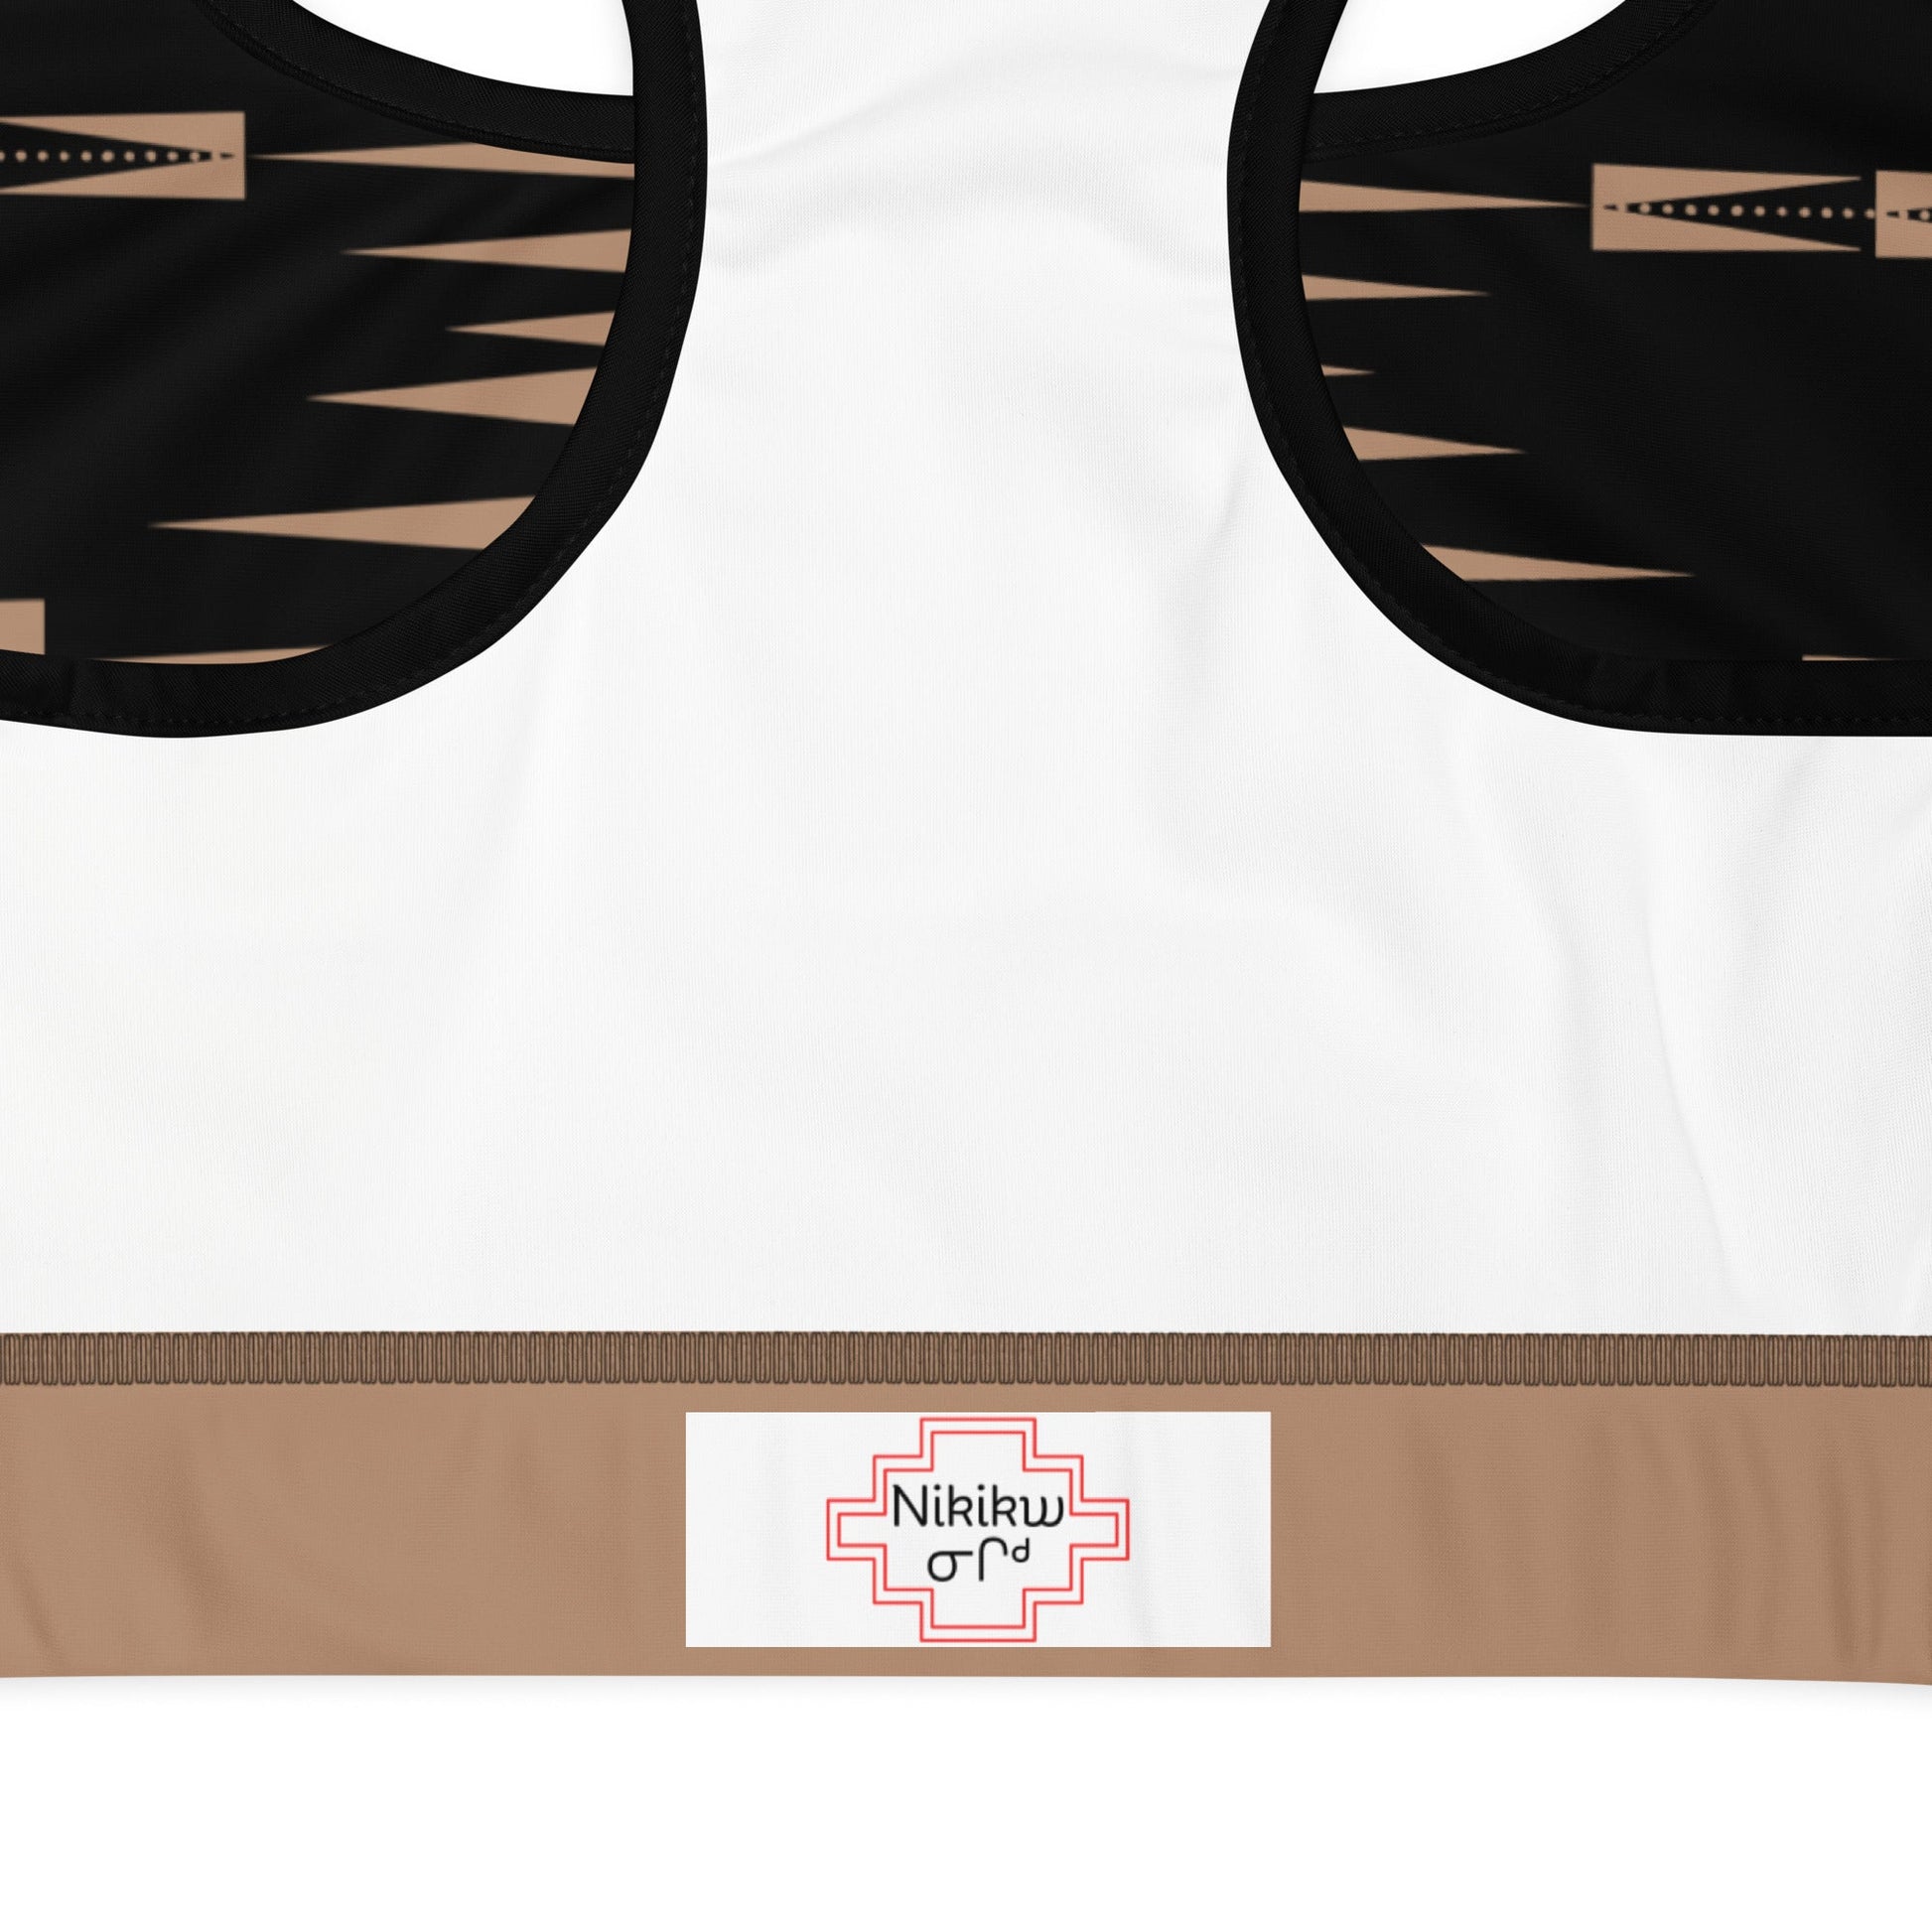 Native Print Sports bra - Nikikw Designs